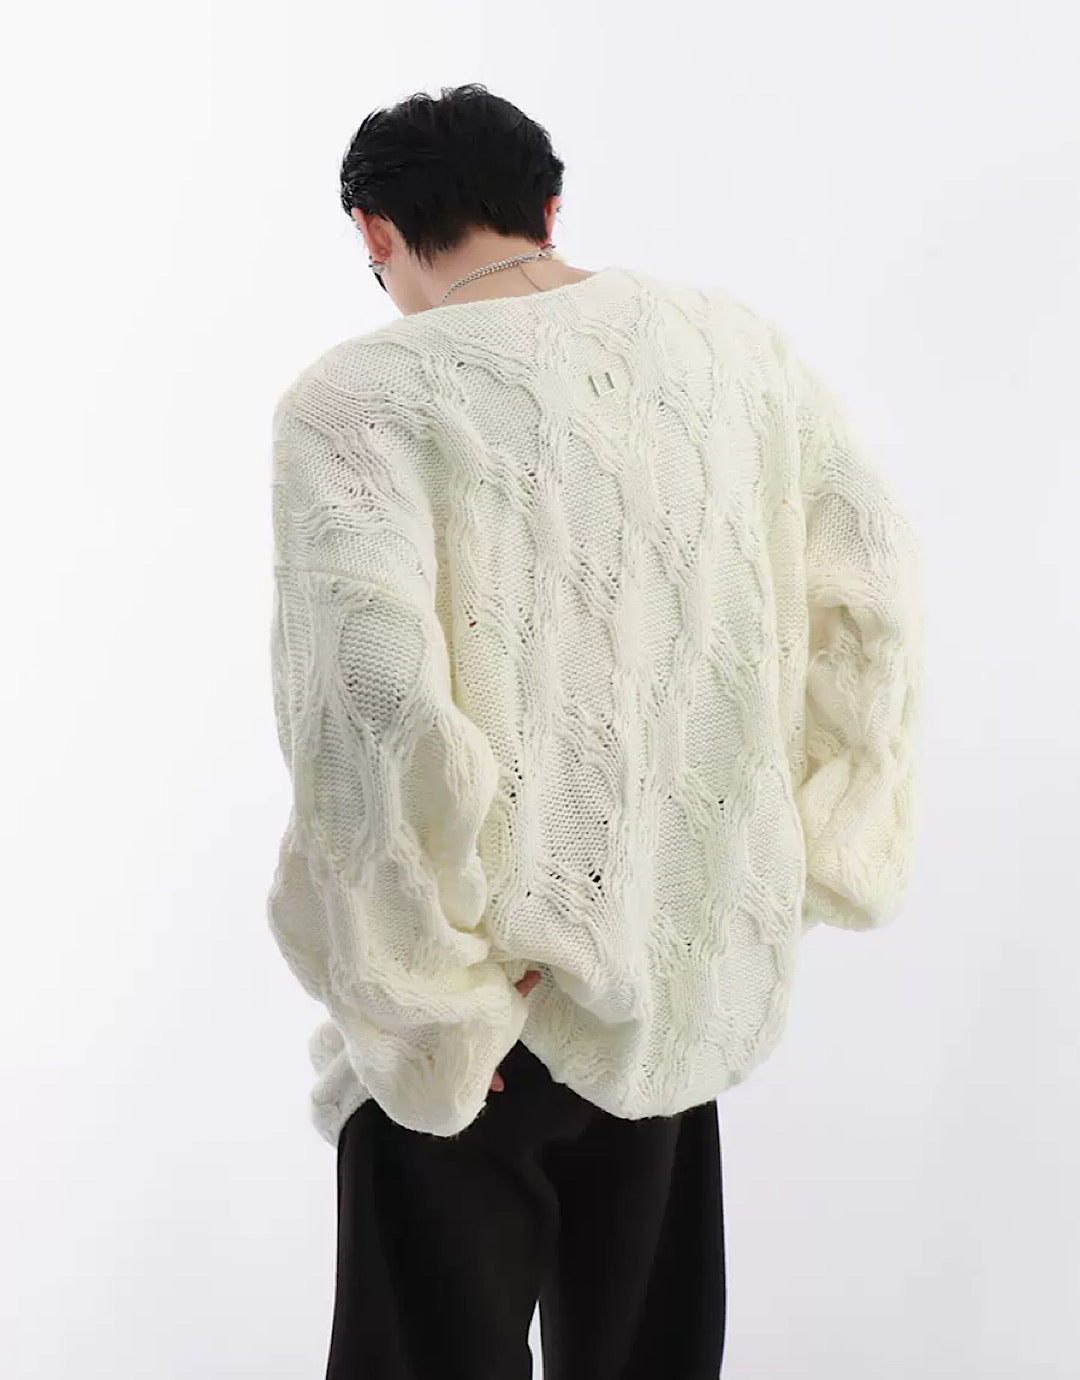 [Culture E] Hoonet ring white sweater CE0022